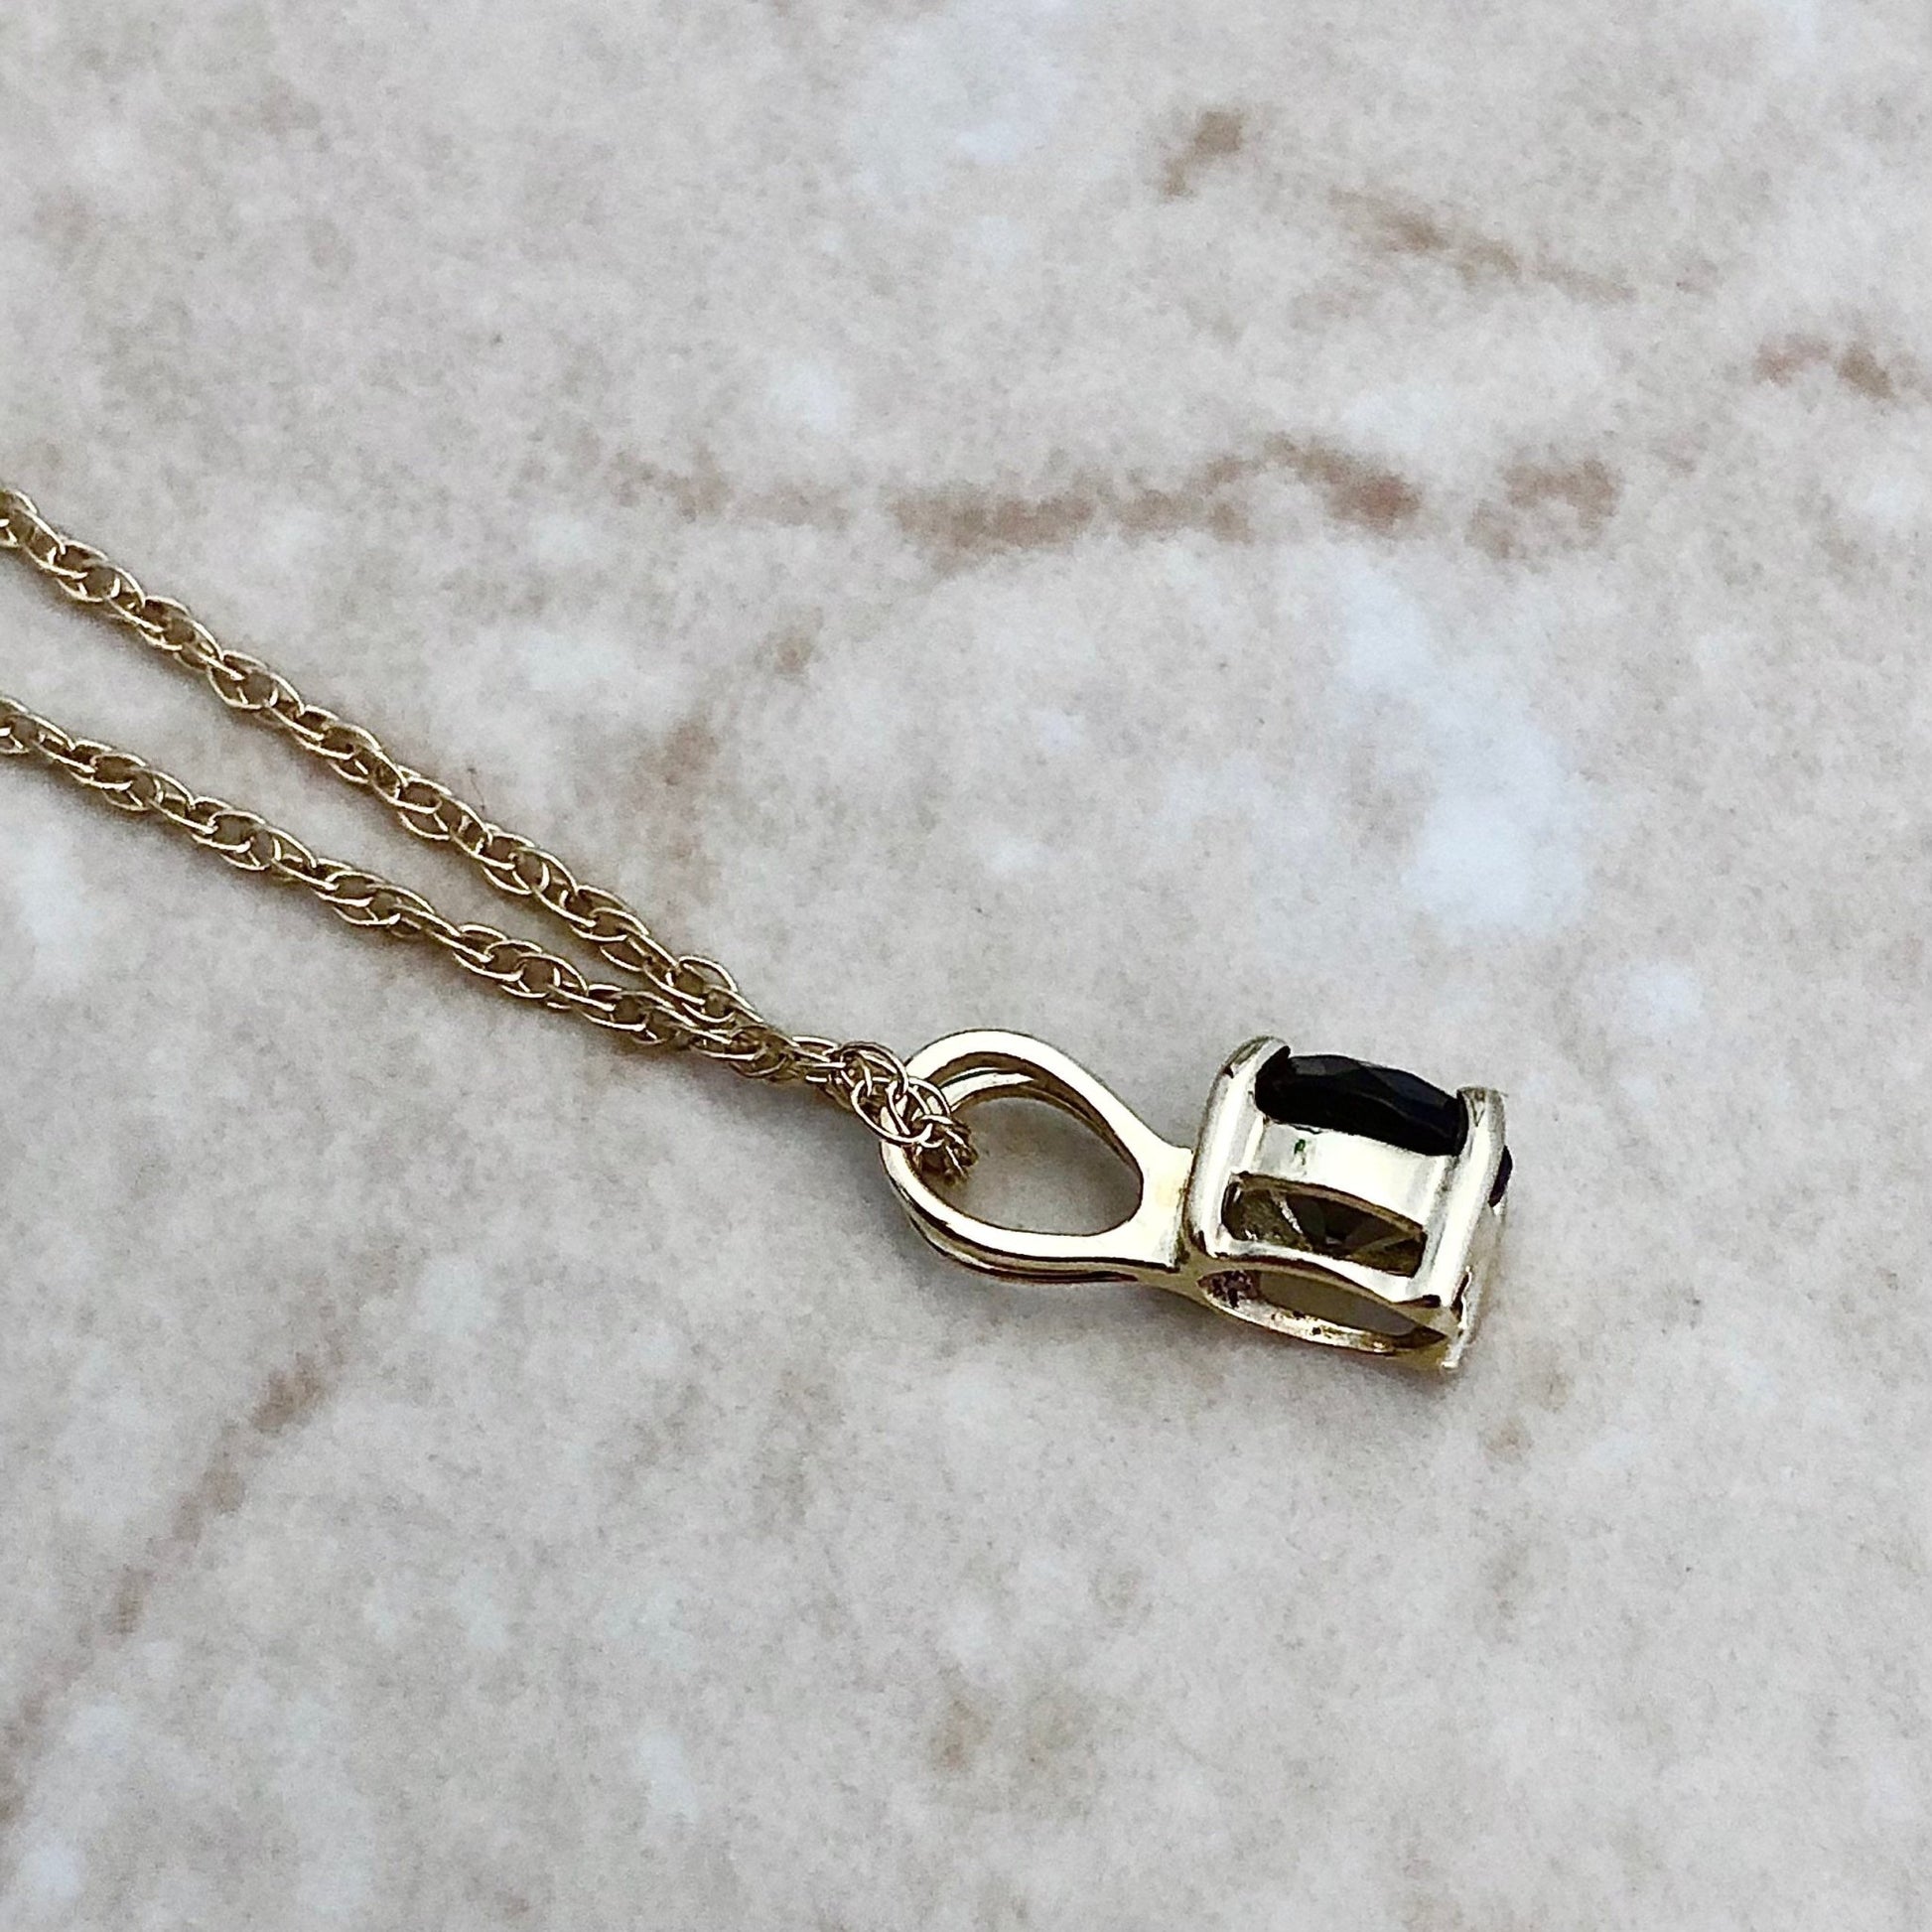 14K Smoky Quartz Pendant Necklace - Yellow Gold - June Birthstone - Genuine Gemstone - 18” Chain - Birthday Gift